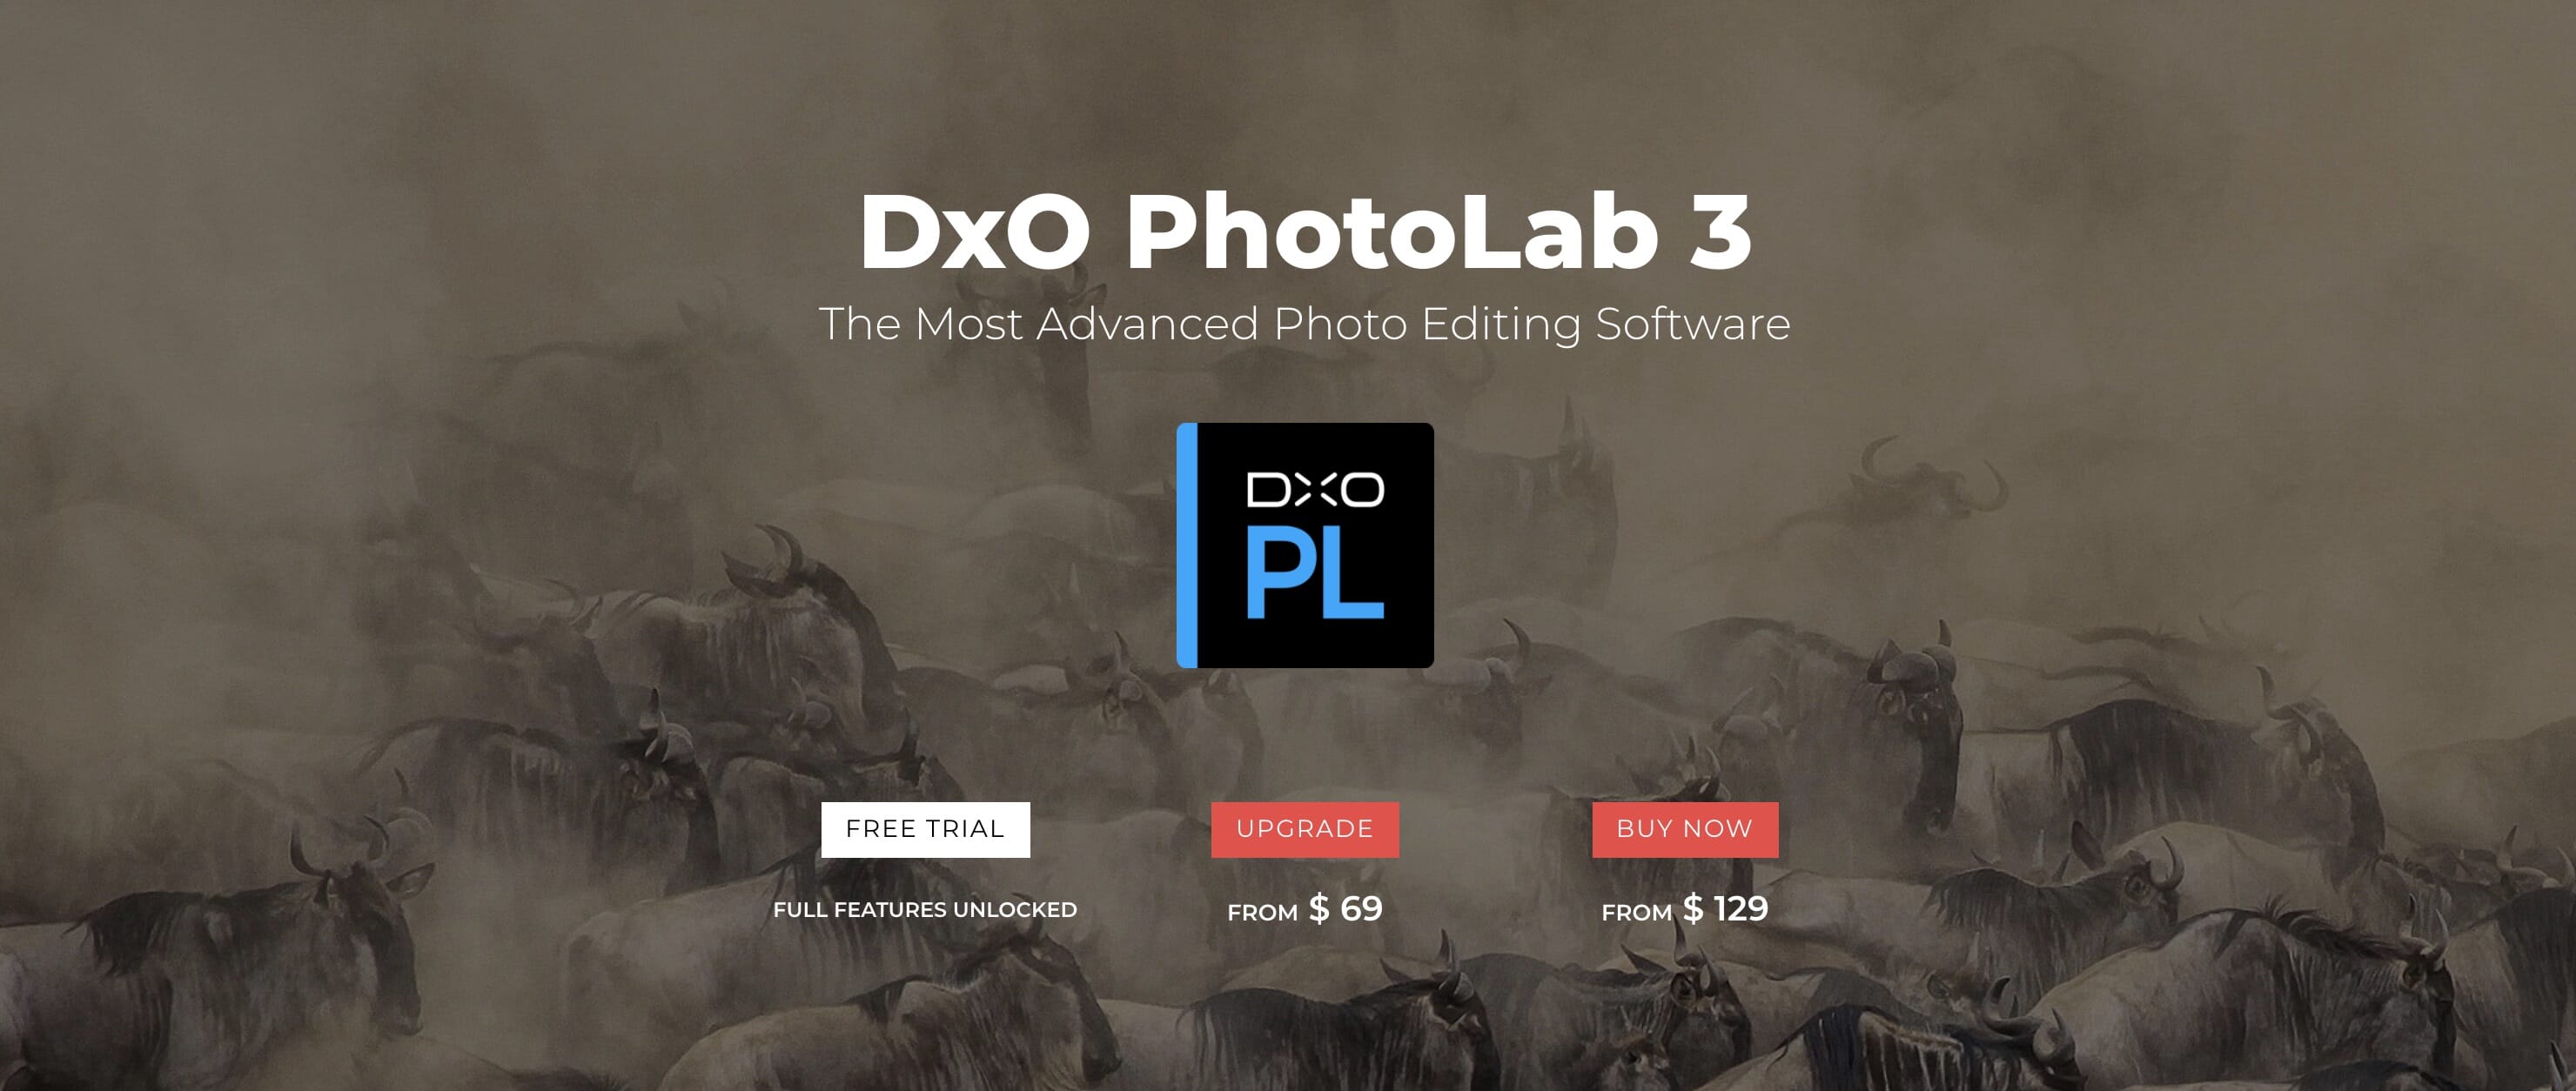 dxo photolab 3 workflow